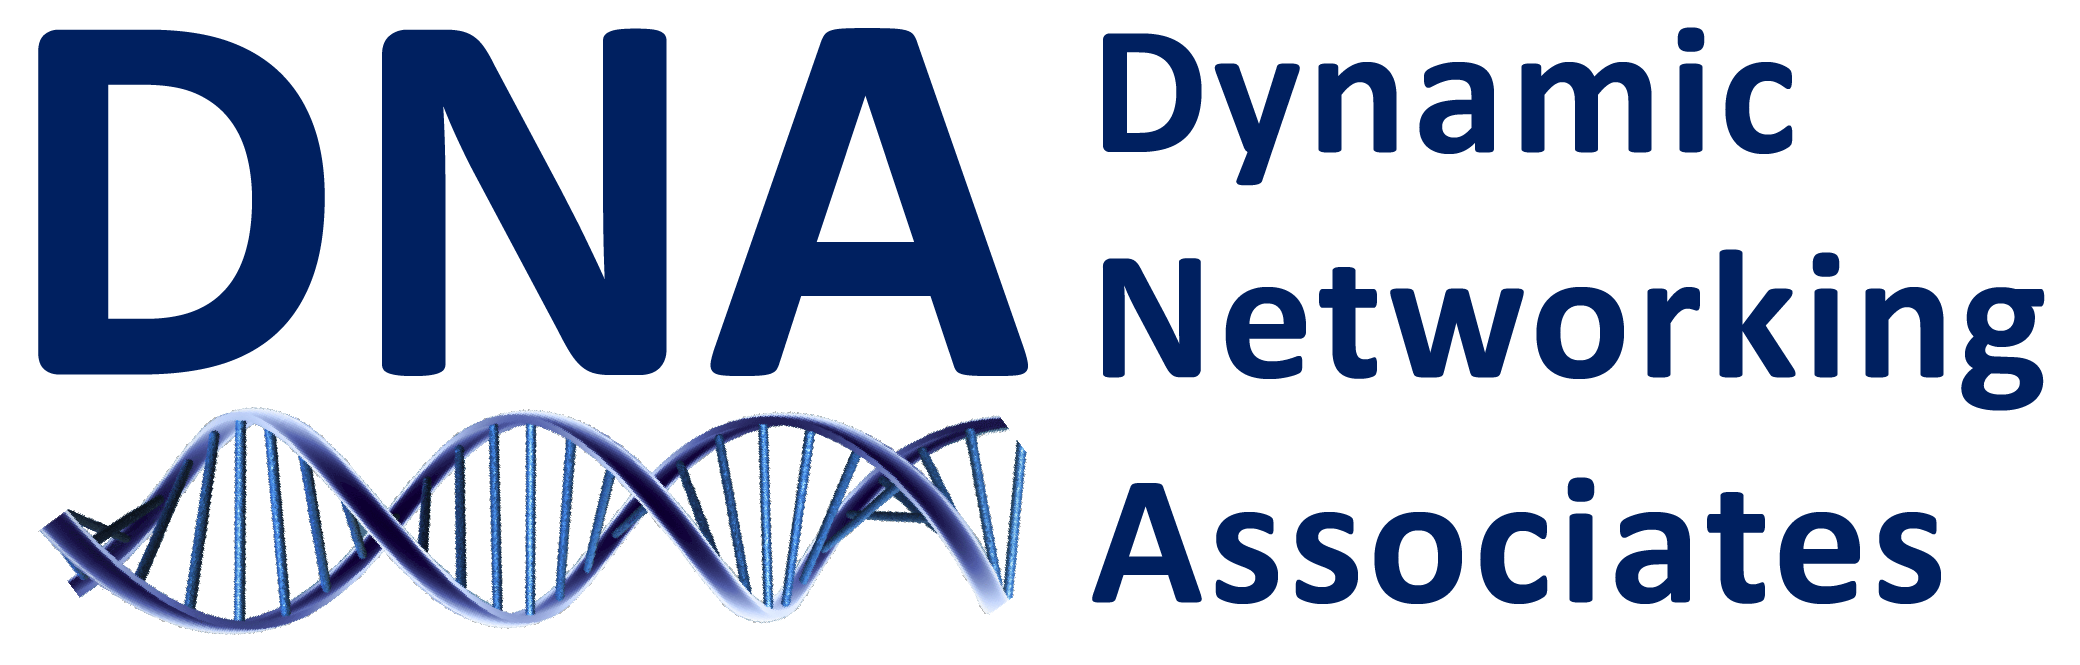 DNA dynamic networking associates